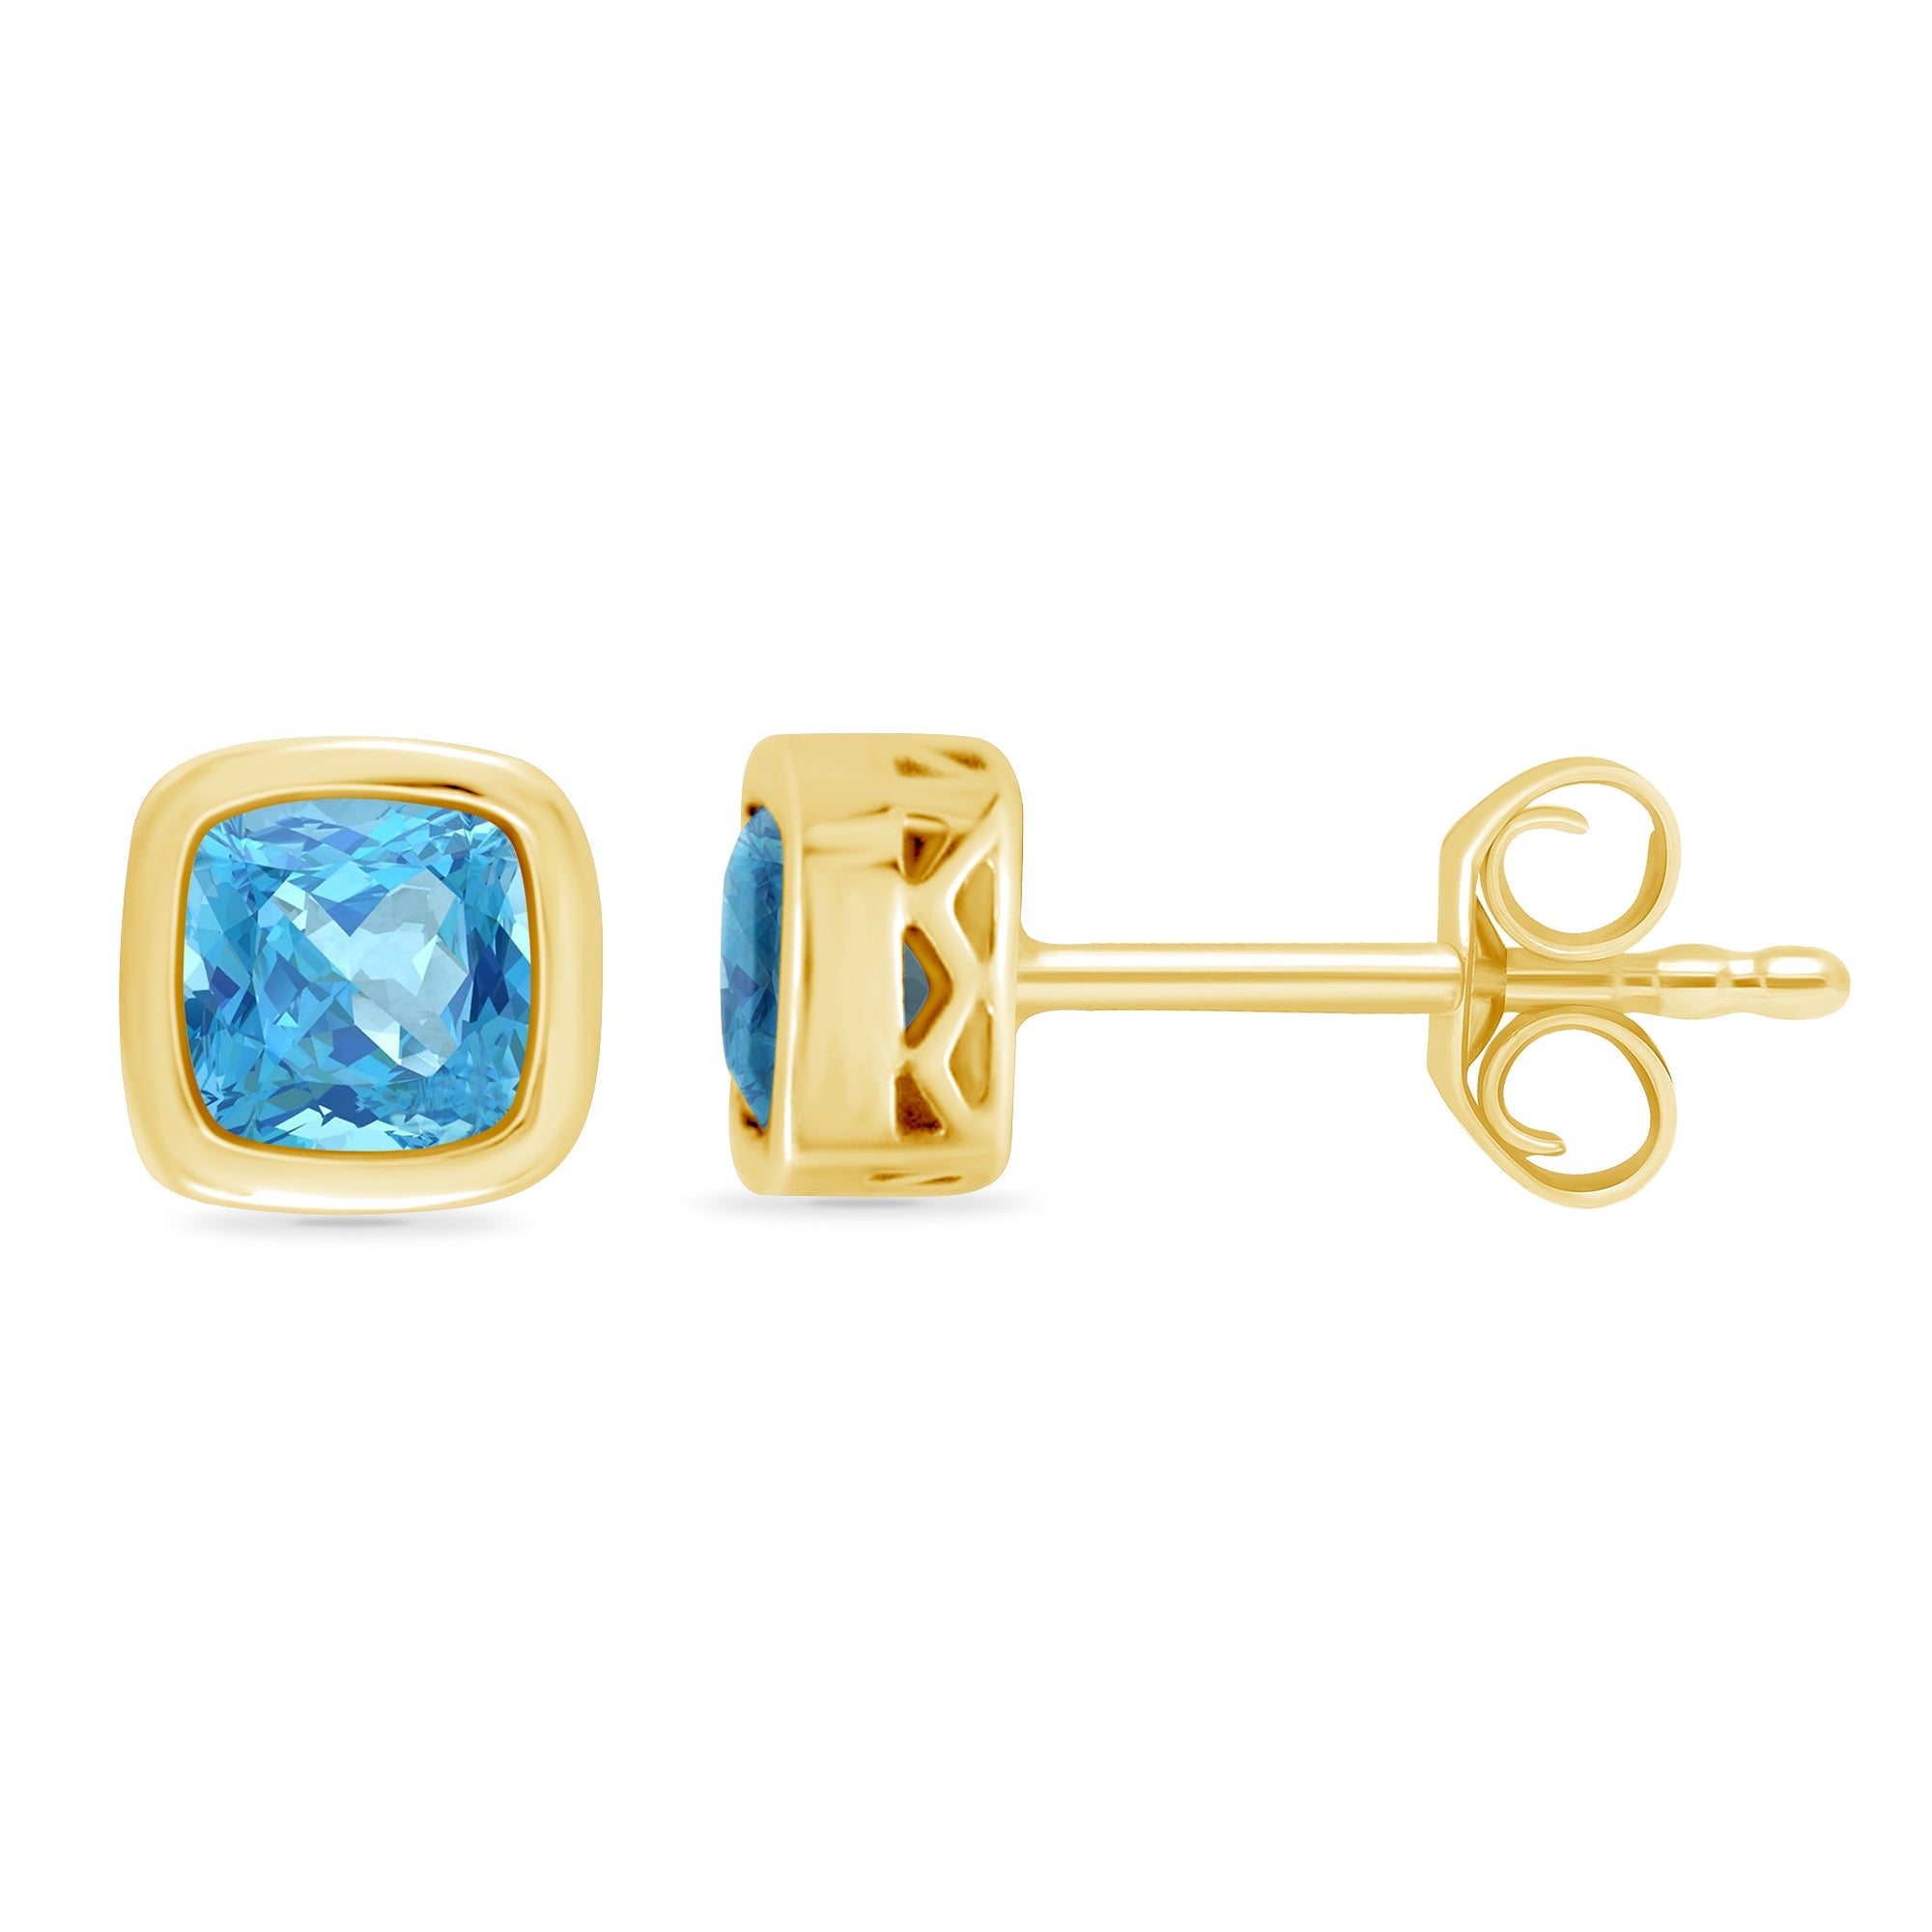 9ct gold 5mm cushion shape rub over set blue topaz stud earrings